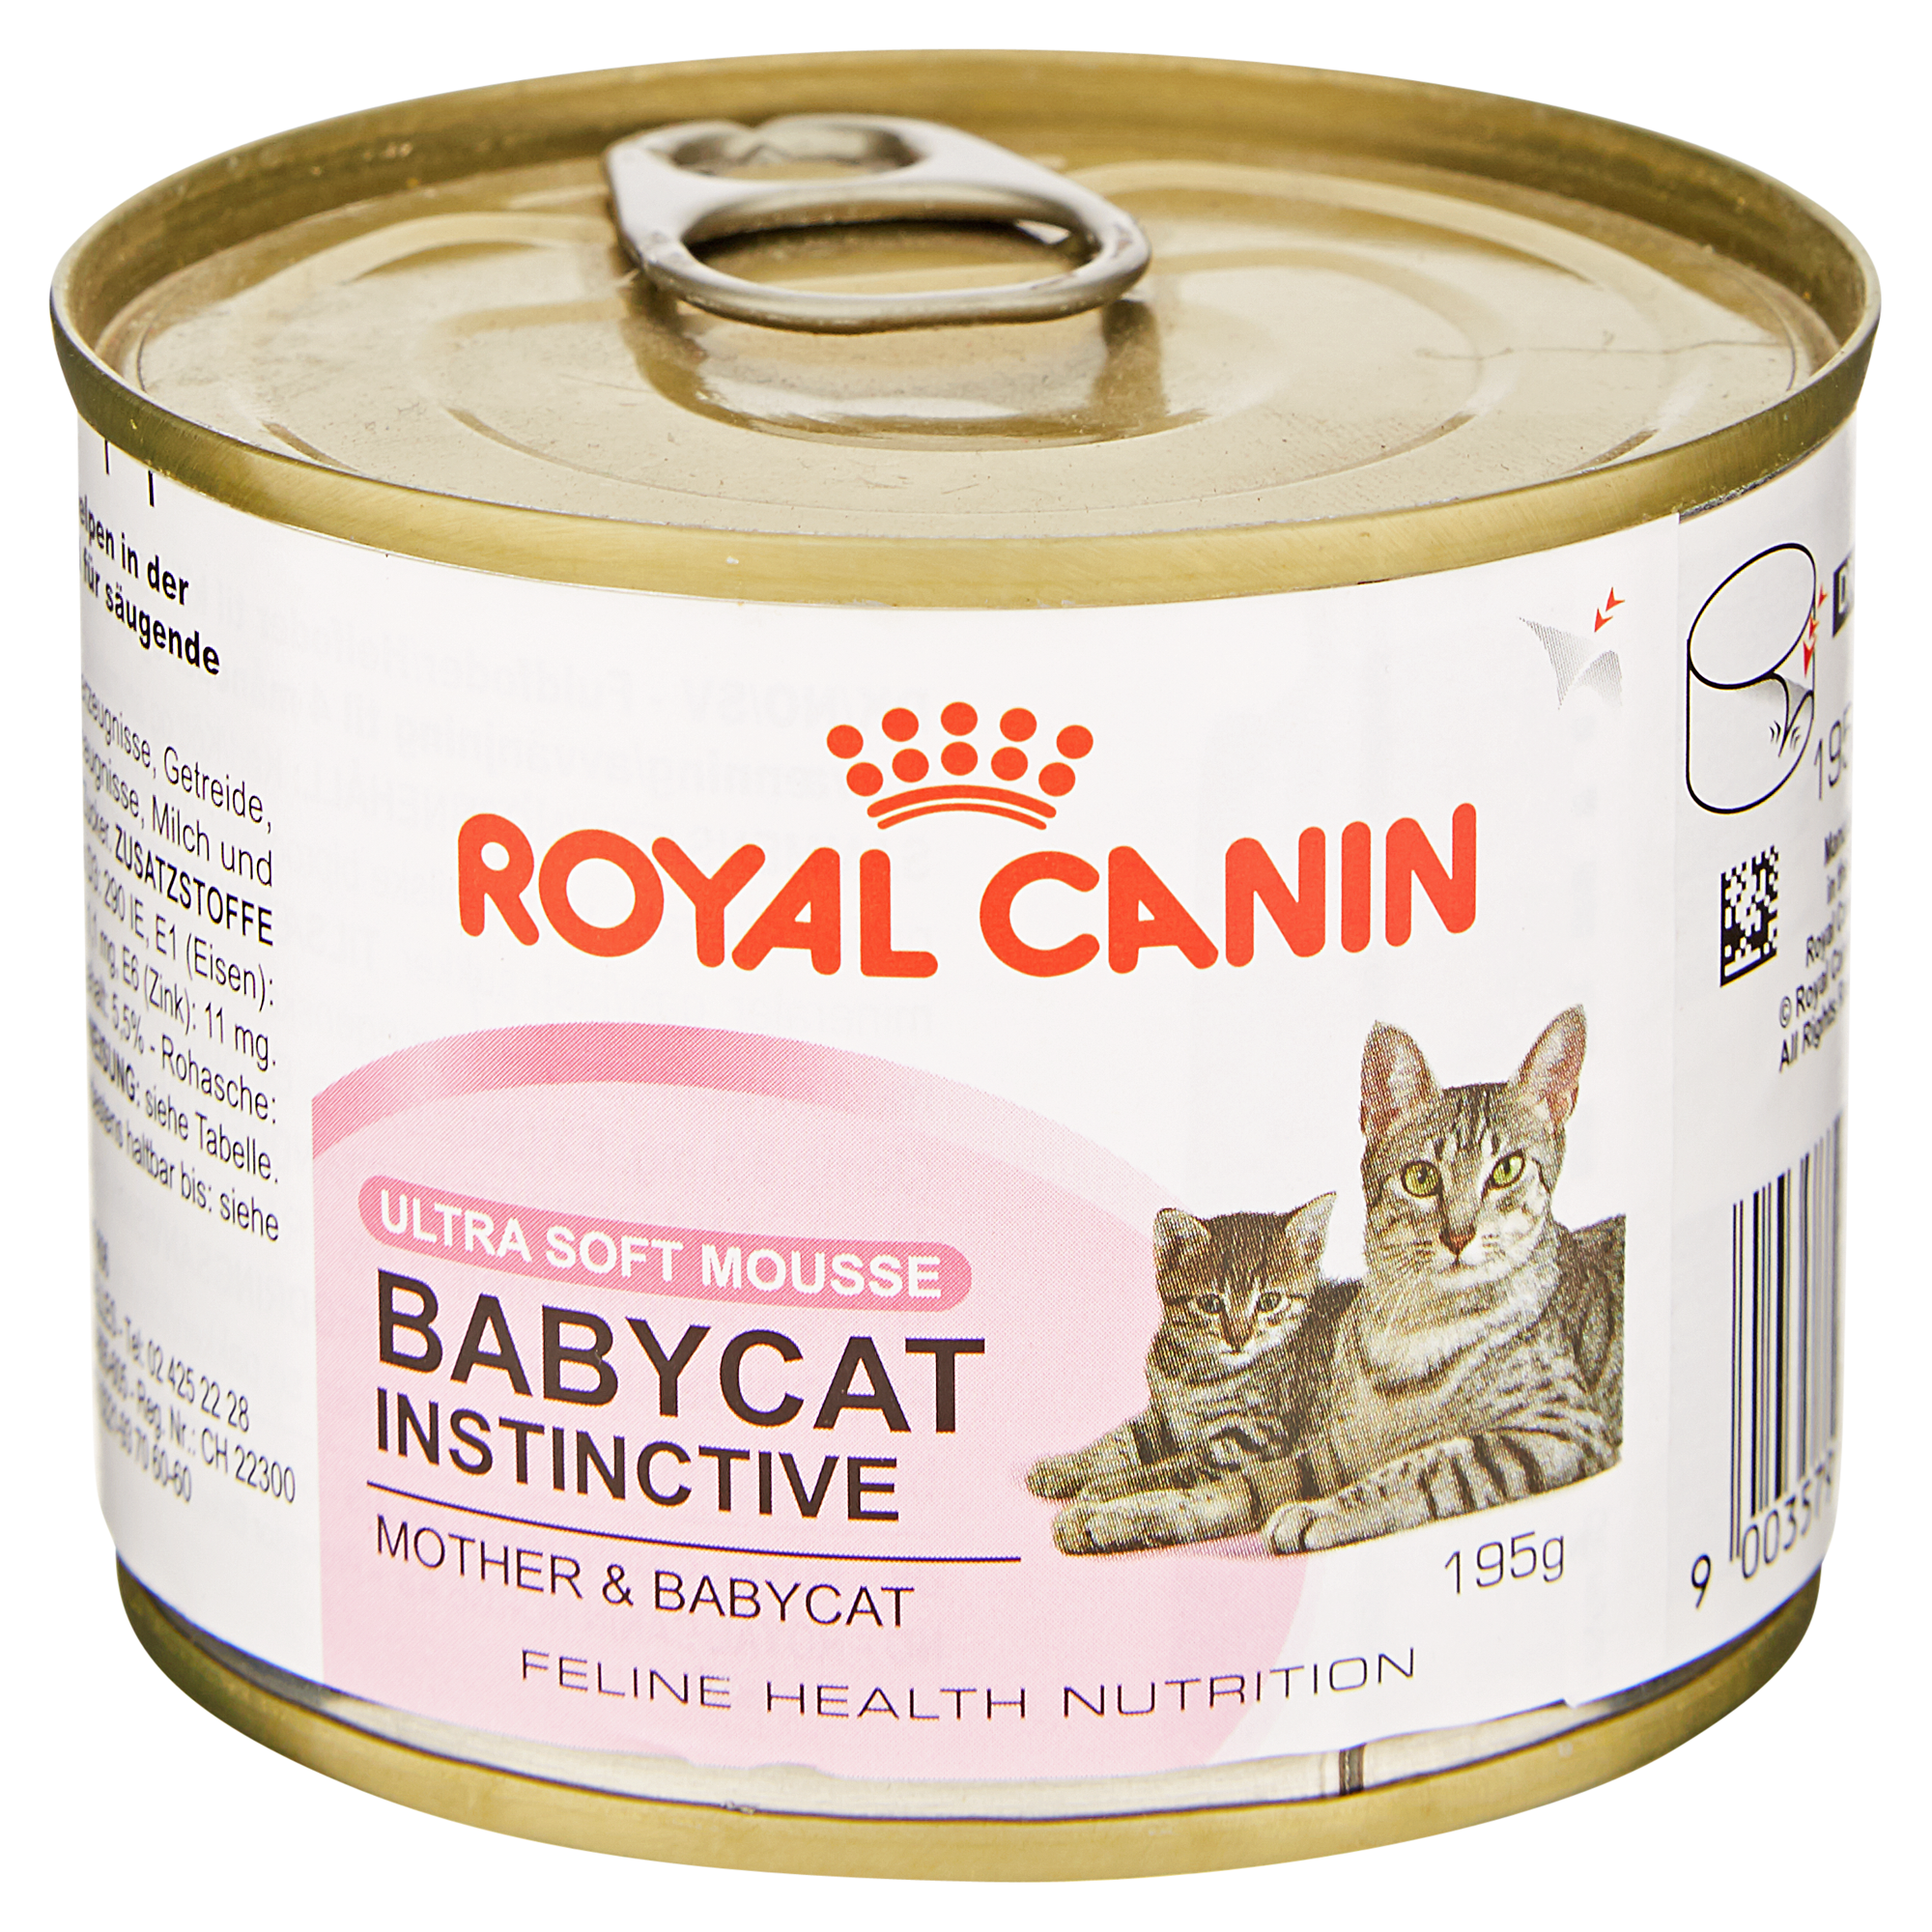 Katzennassfutter "Feline Health Nutrition" Babycat Instinctive 195 g + product picture